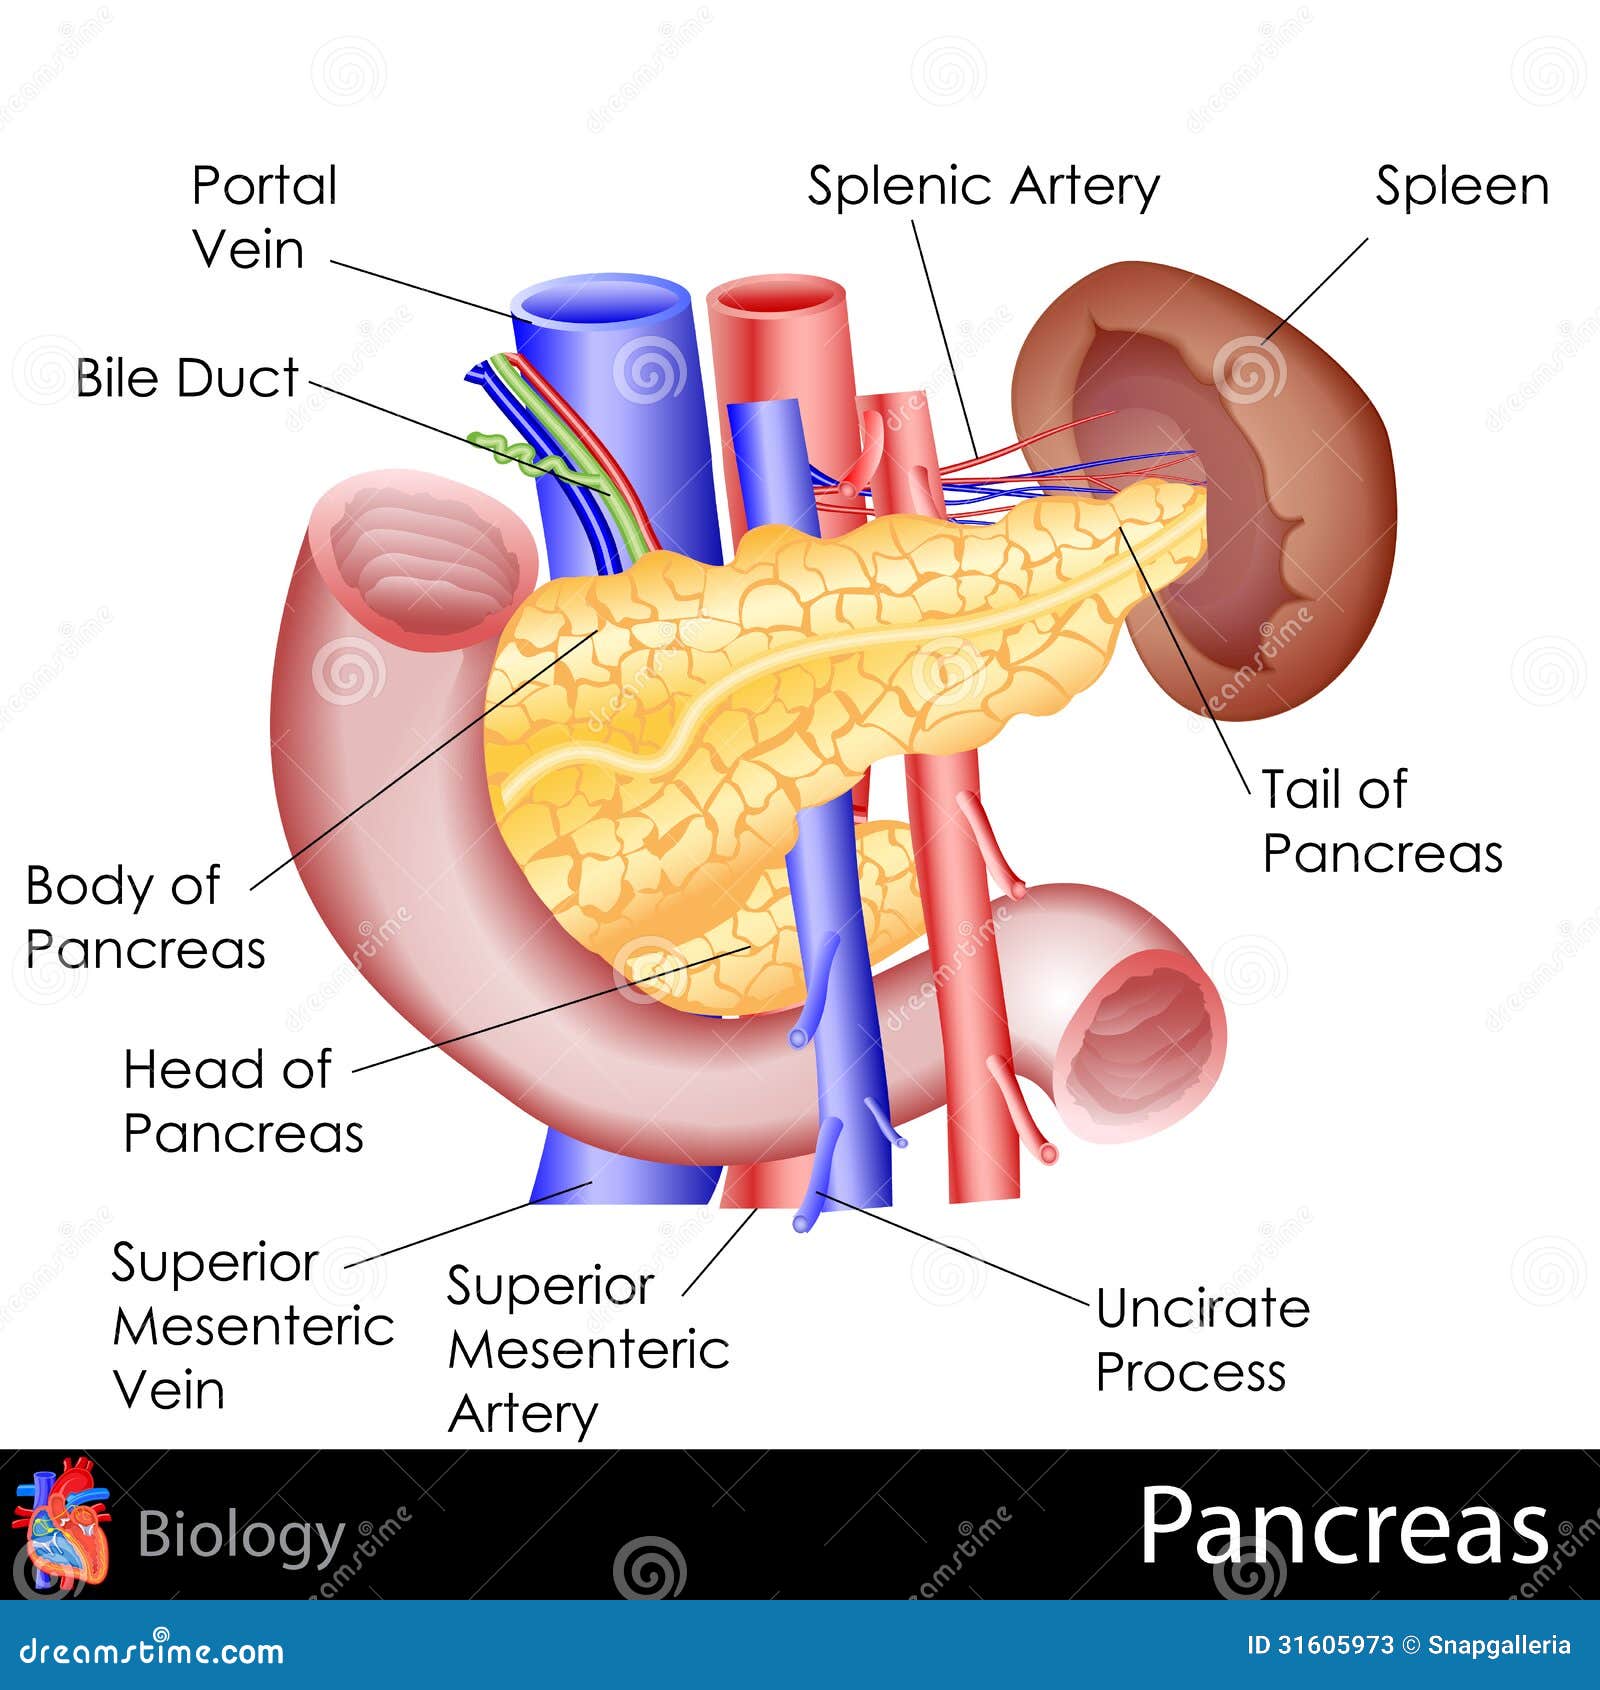 pancreas diagram || easy way to draw pancreas diagram || how to dra pancreas  diagram - YouTube